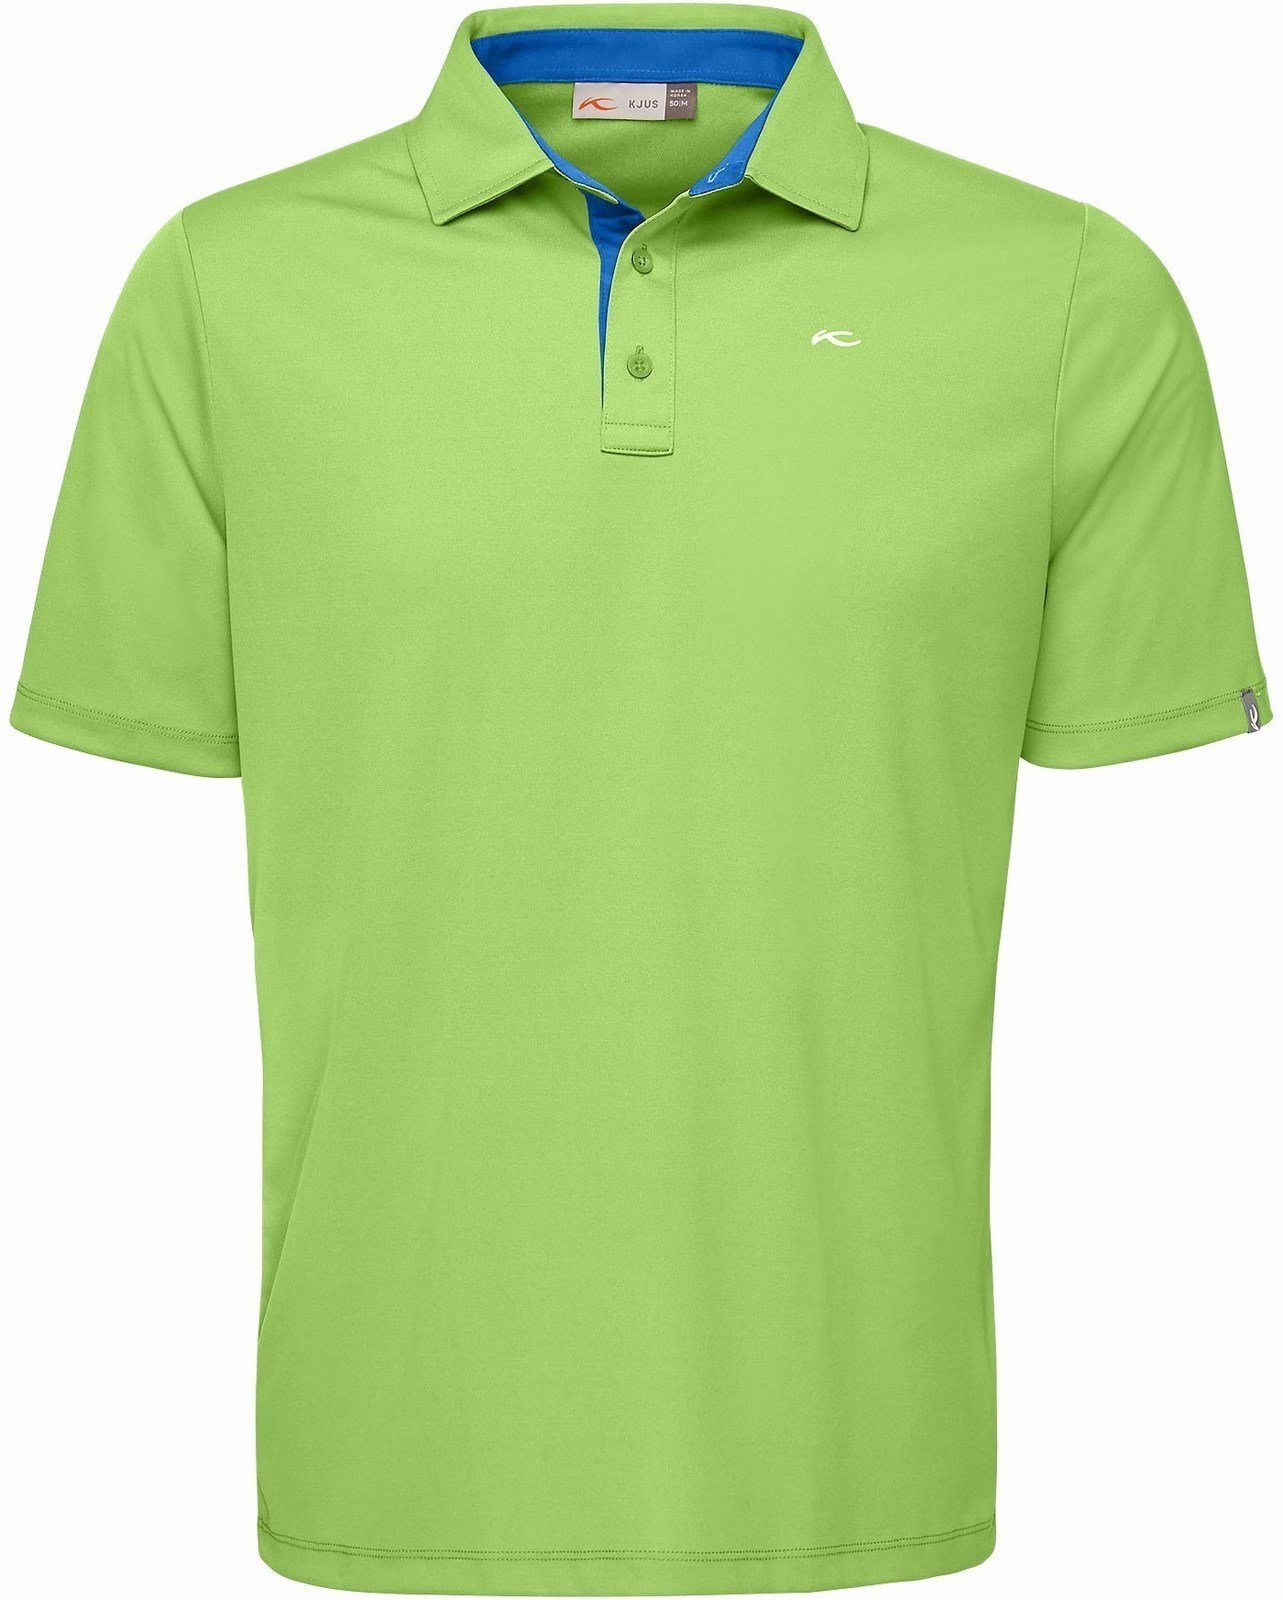 Polo Shirt Kjus Silas Green Glow/Nebula 50